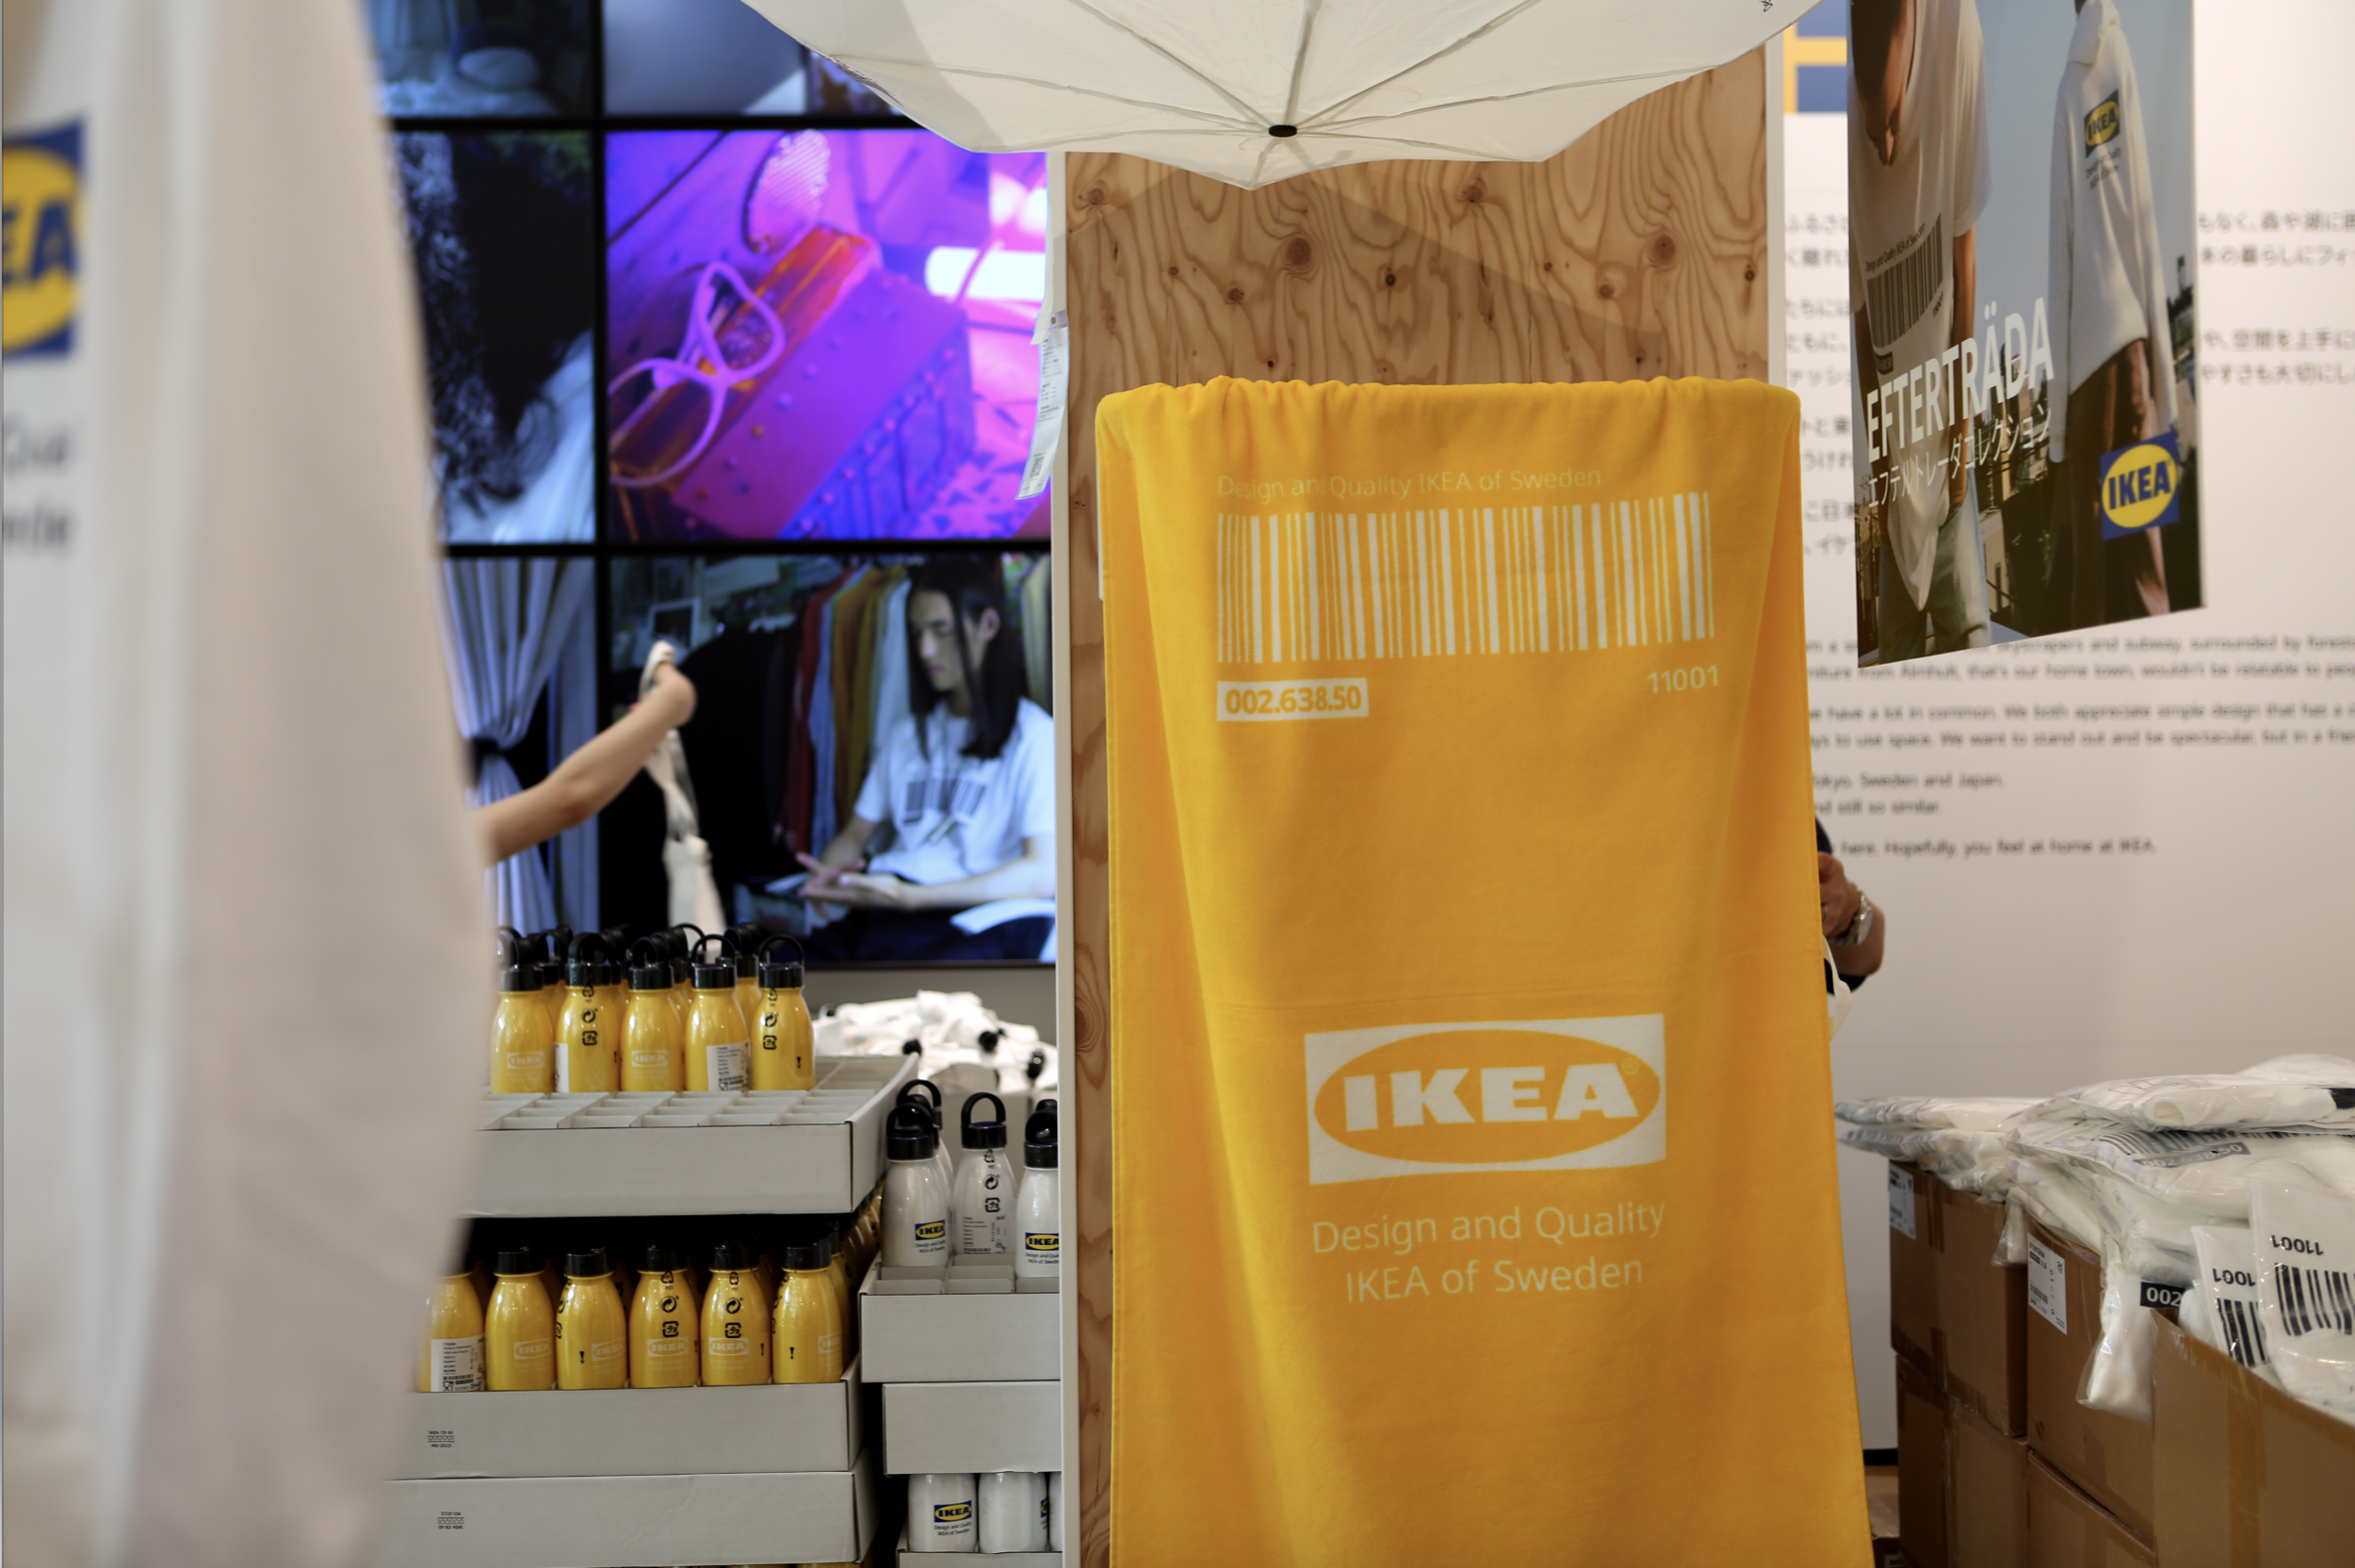 IKEA_Eftertrada_Retail_6.png